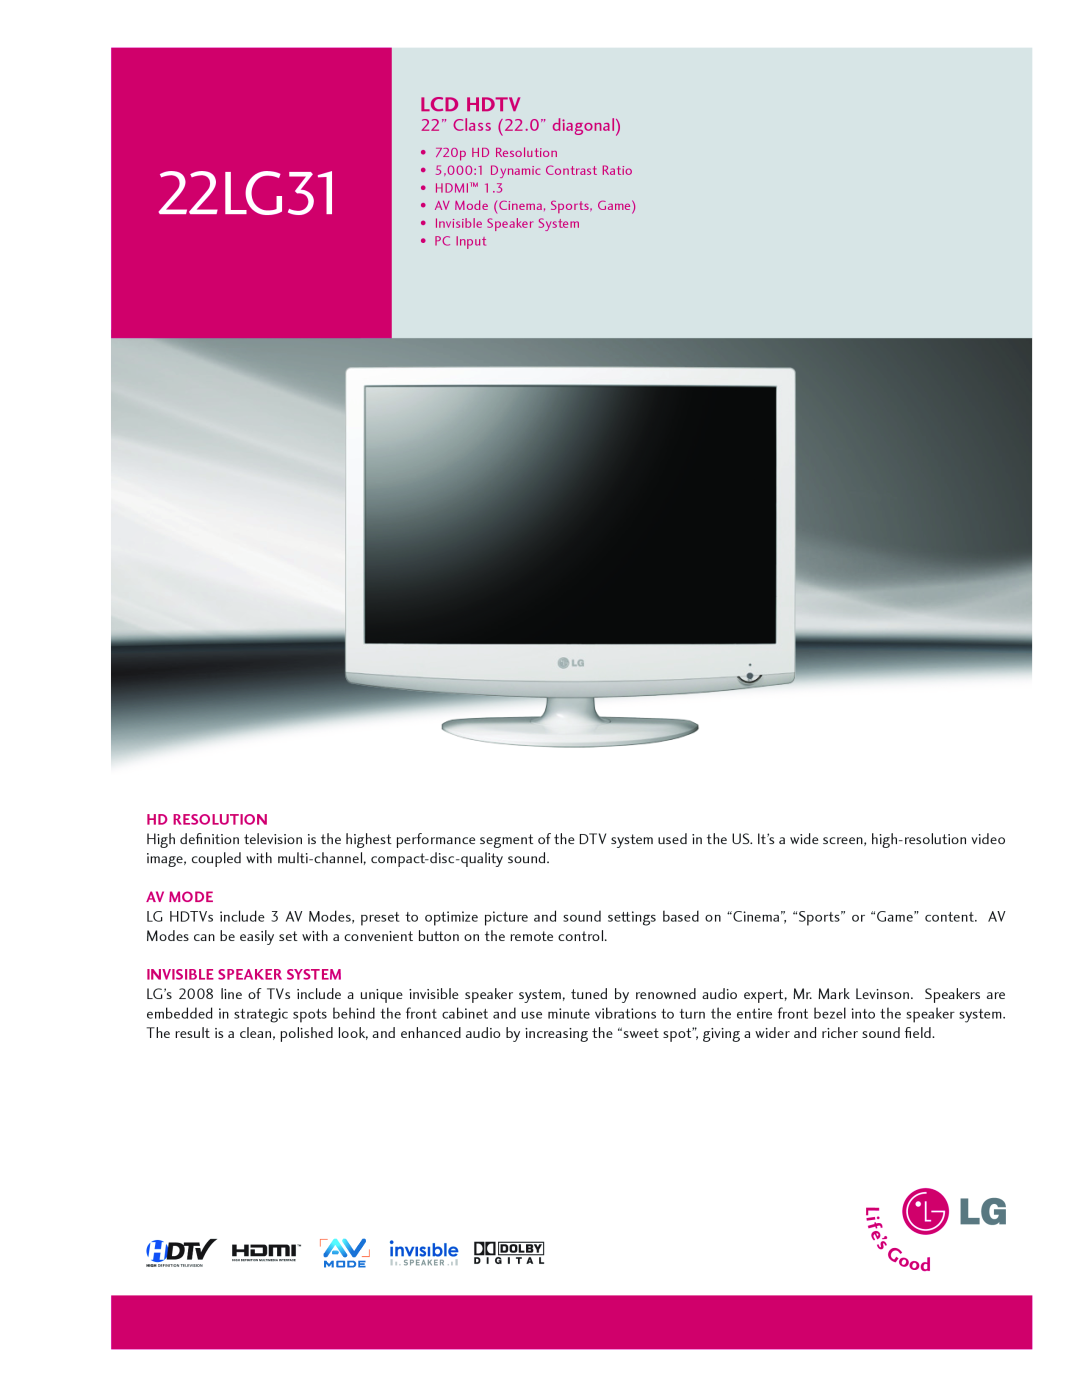 LG Electronics 2231 manual Lcd Hdtv, 22” Class 22.0” diagonal, 22LG31, Hd Resolution, Av Mode, Invisible Speaker System 